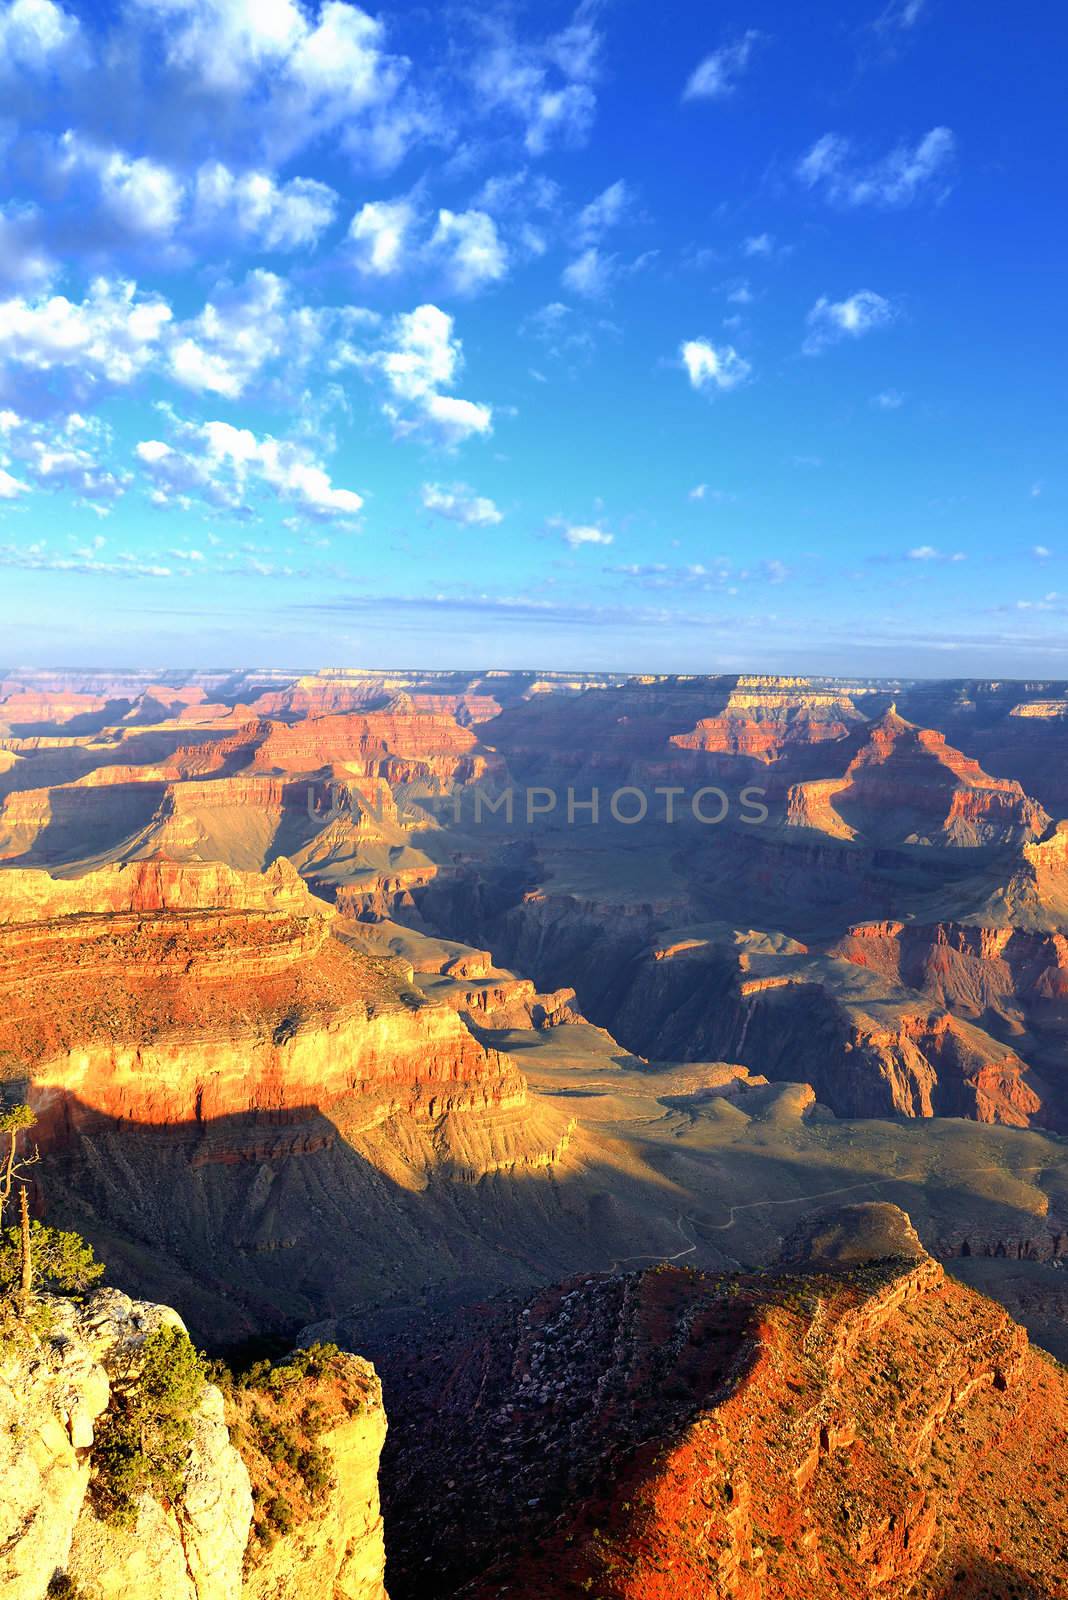 Hopi Point, Grand Canyon National Park 